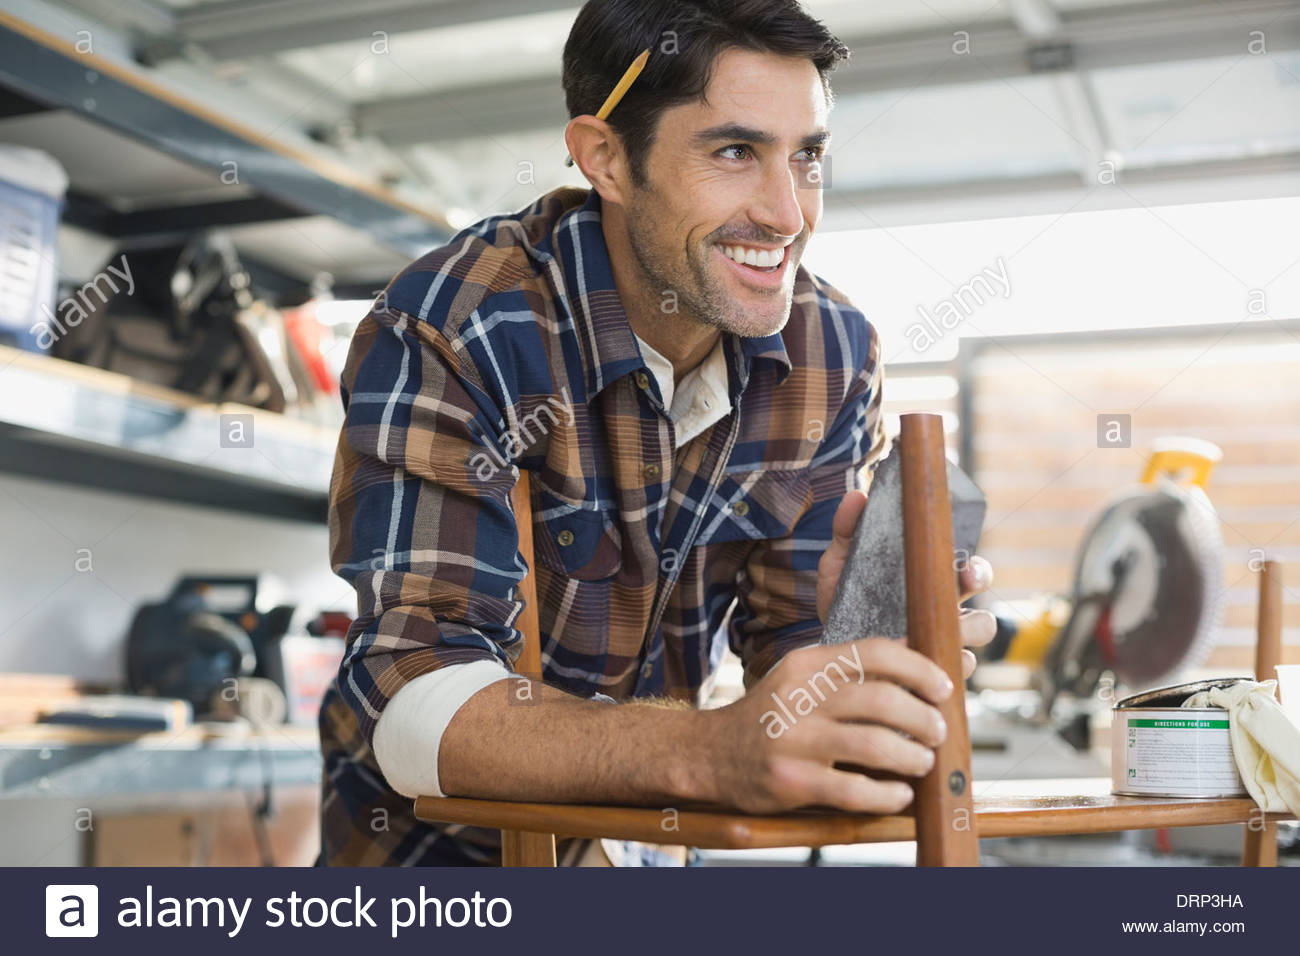 Carpenter smiling in workshop Stock Photo